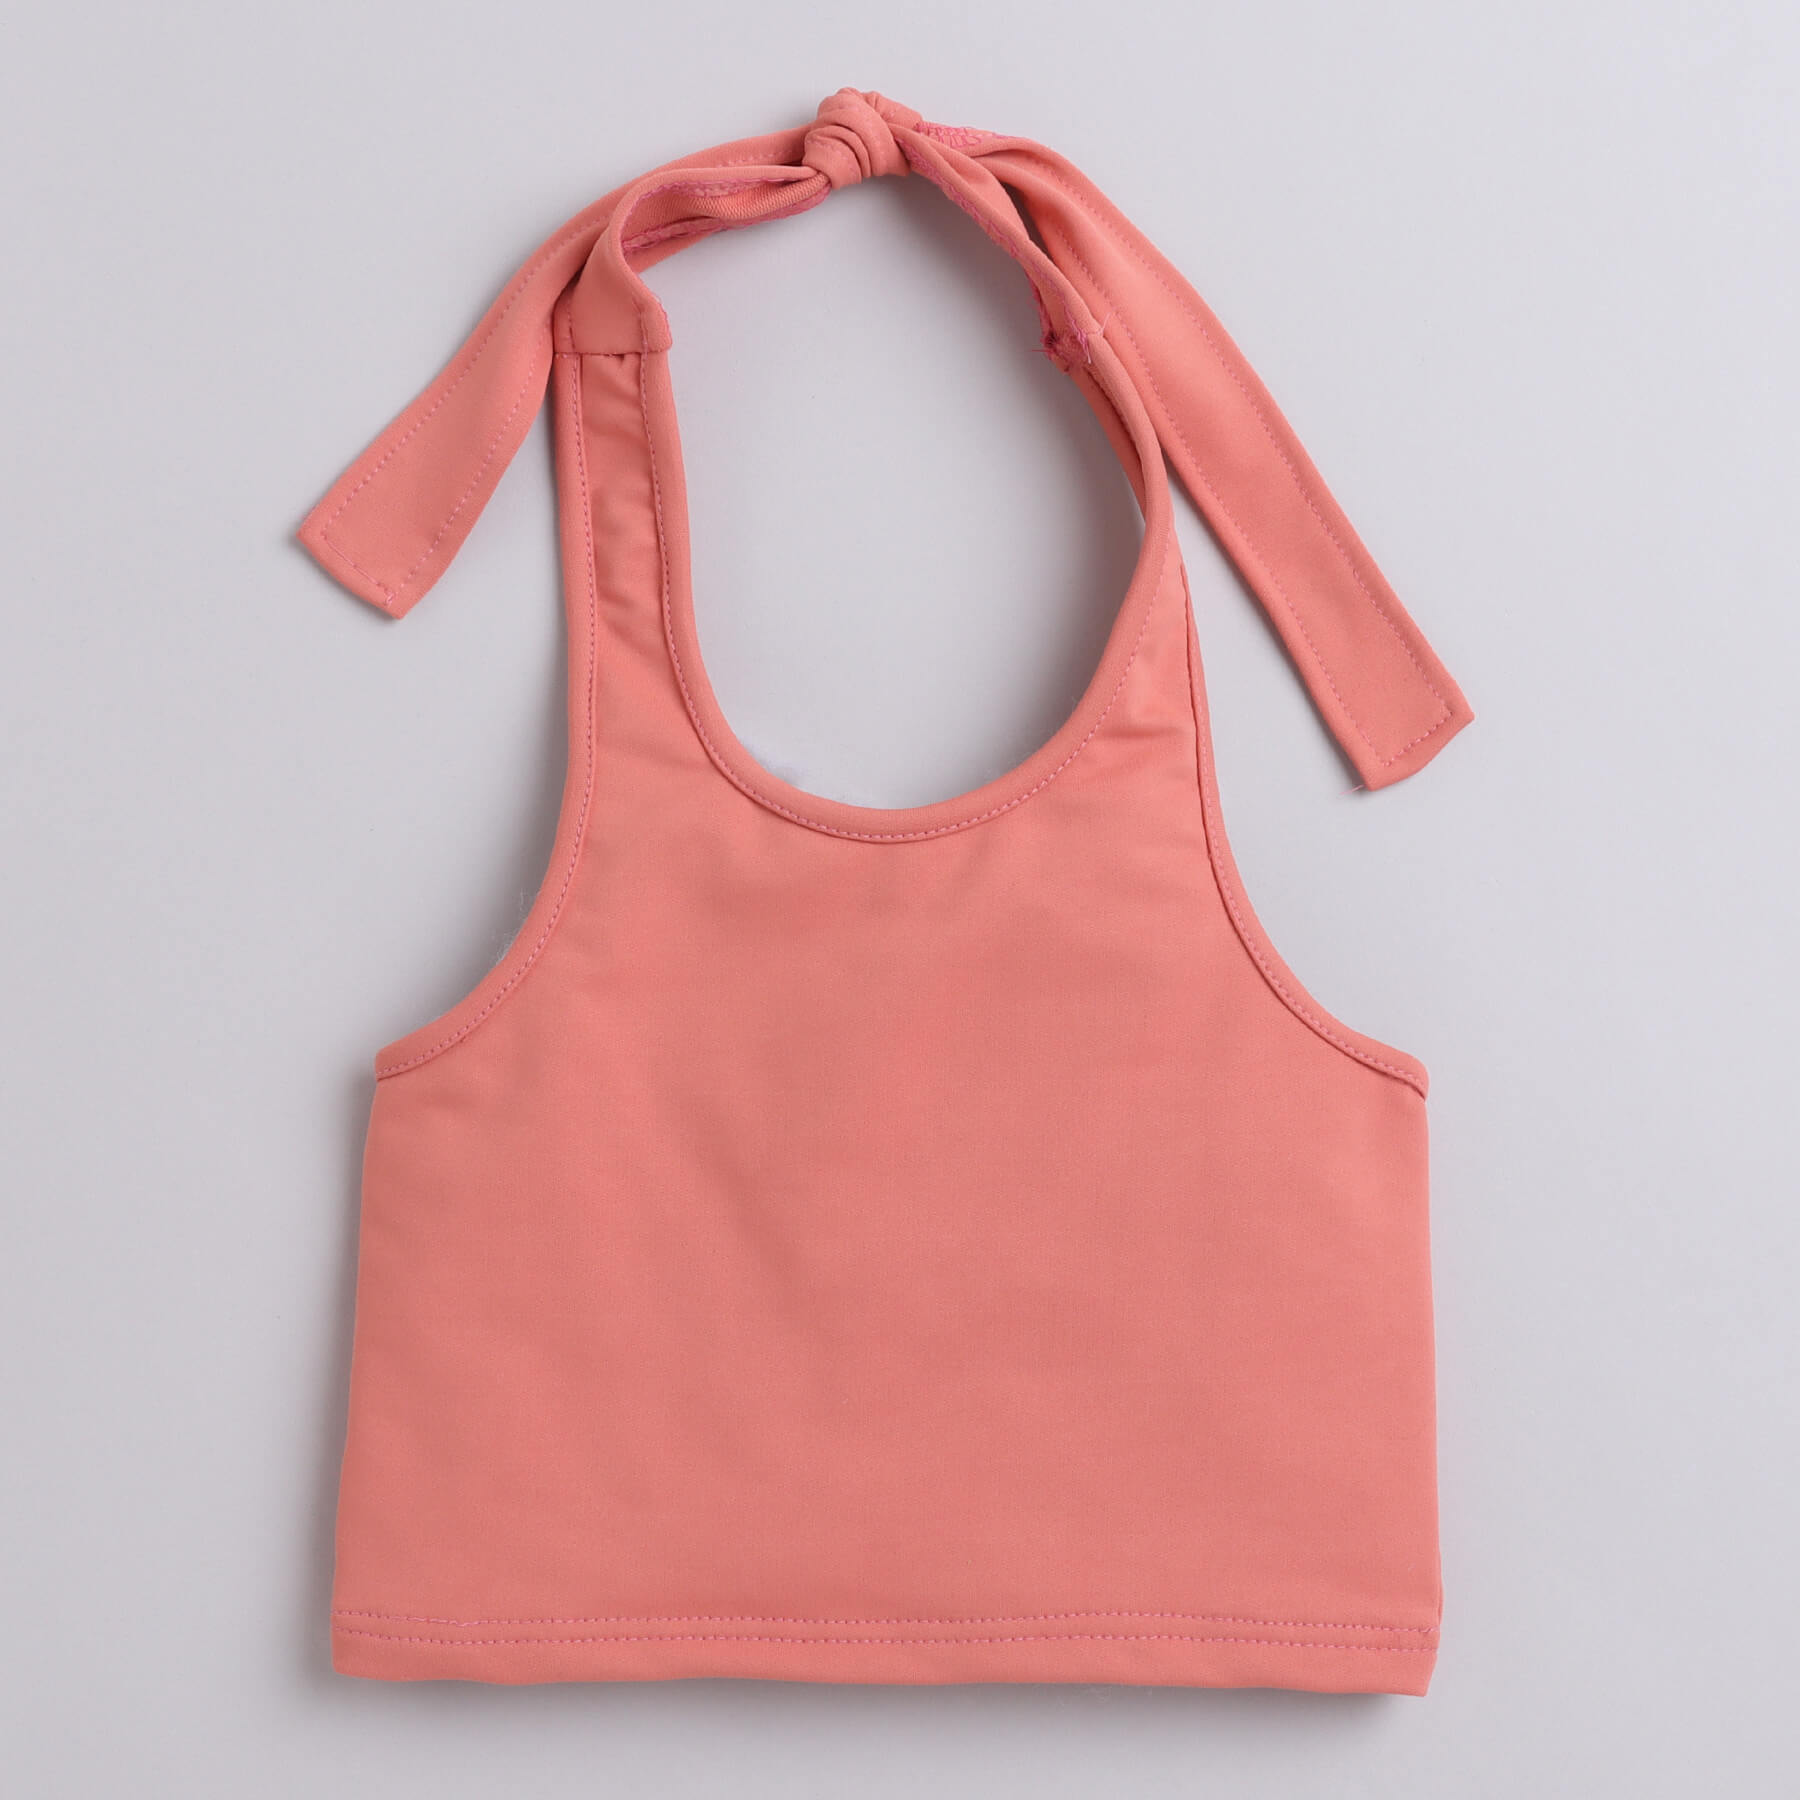 Taffykids sleeveless Halter neck crop top and tape detail short set- Peach/White